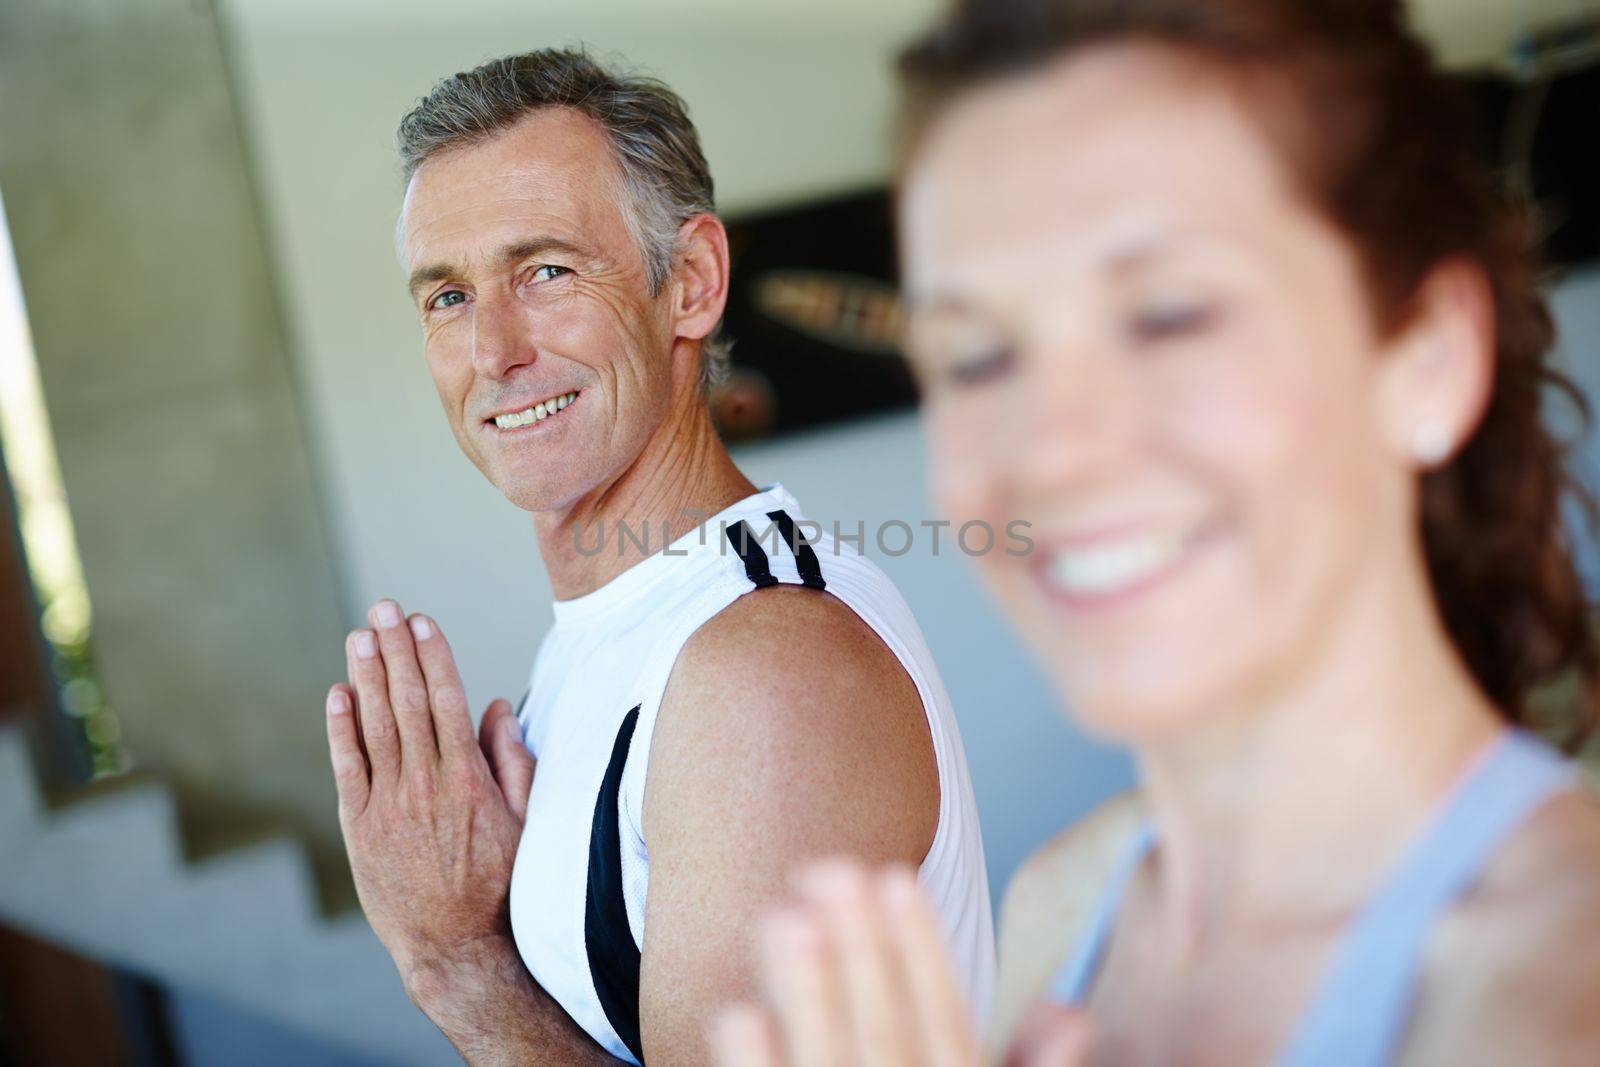 Yoga keeps him balanced. A mature man enjoying a yoga class with a smile of positivity